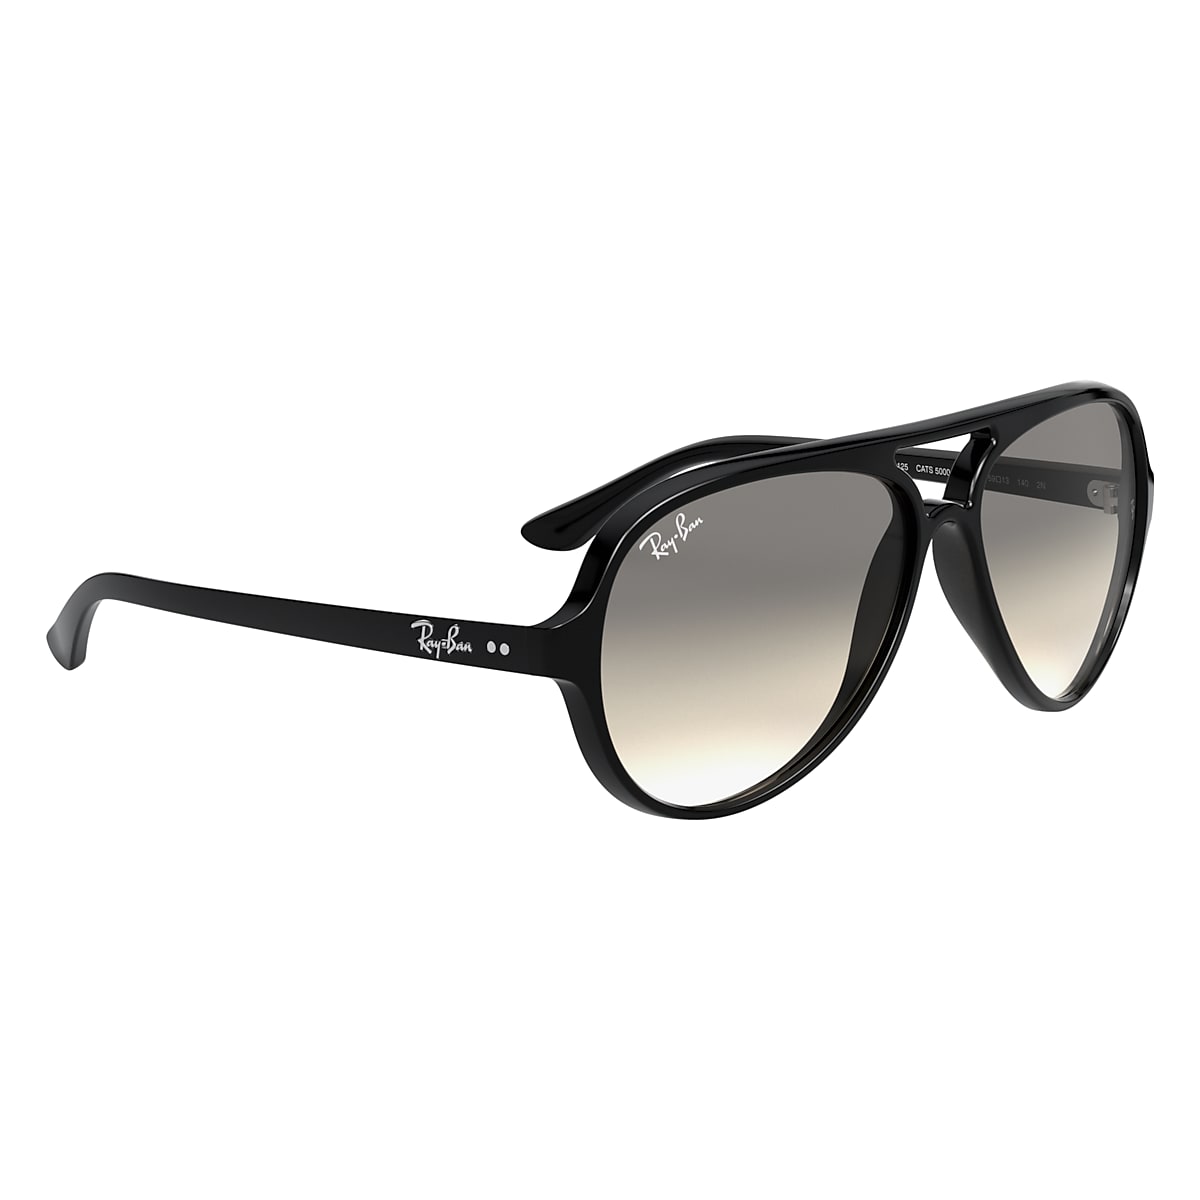 landheer Regenachtig Watt Cats 5000 Classic Sunglasses in Black and Light Grey - RB4125 | Ray-Ban® US